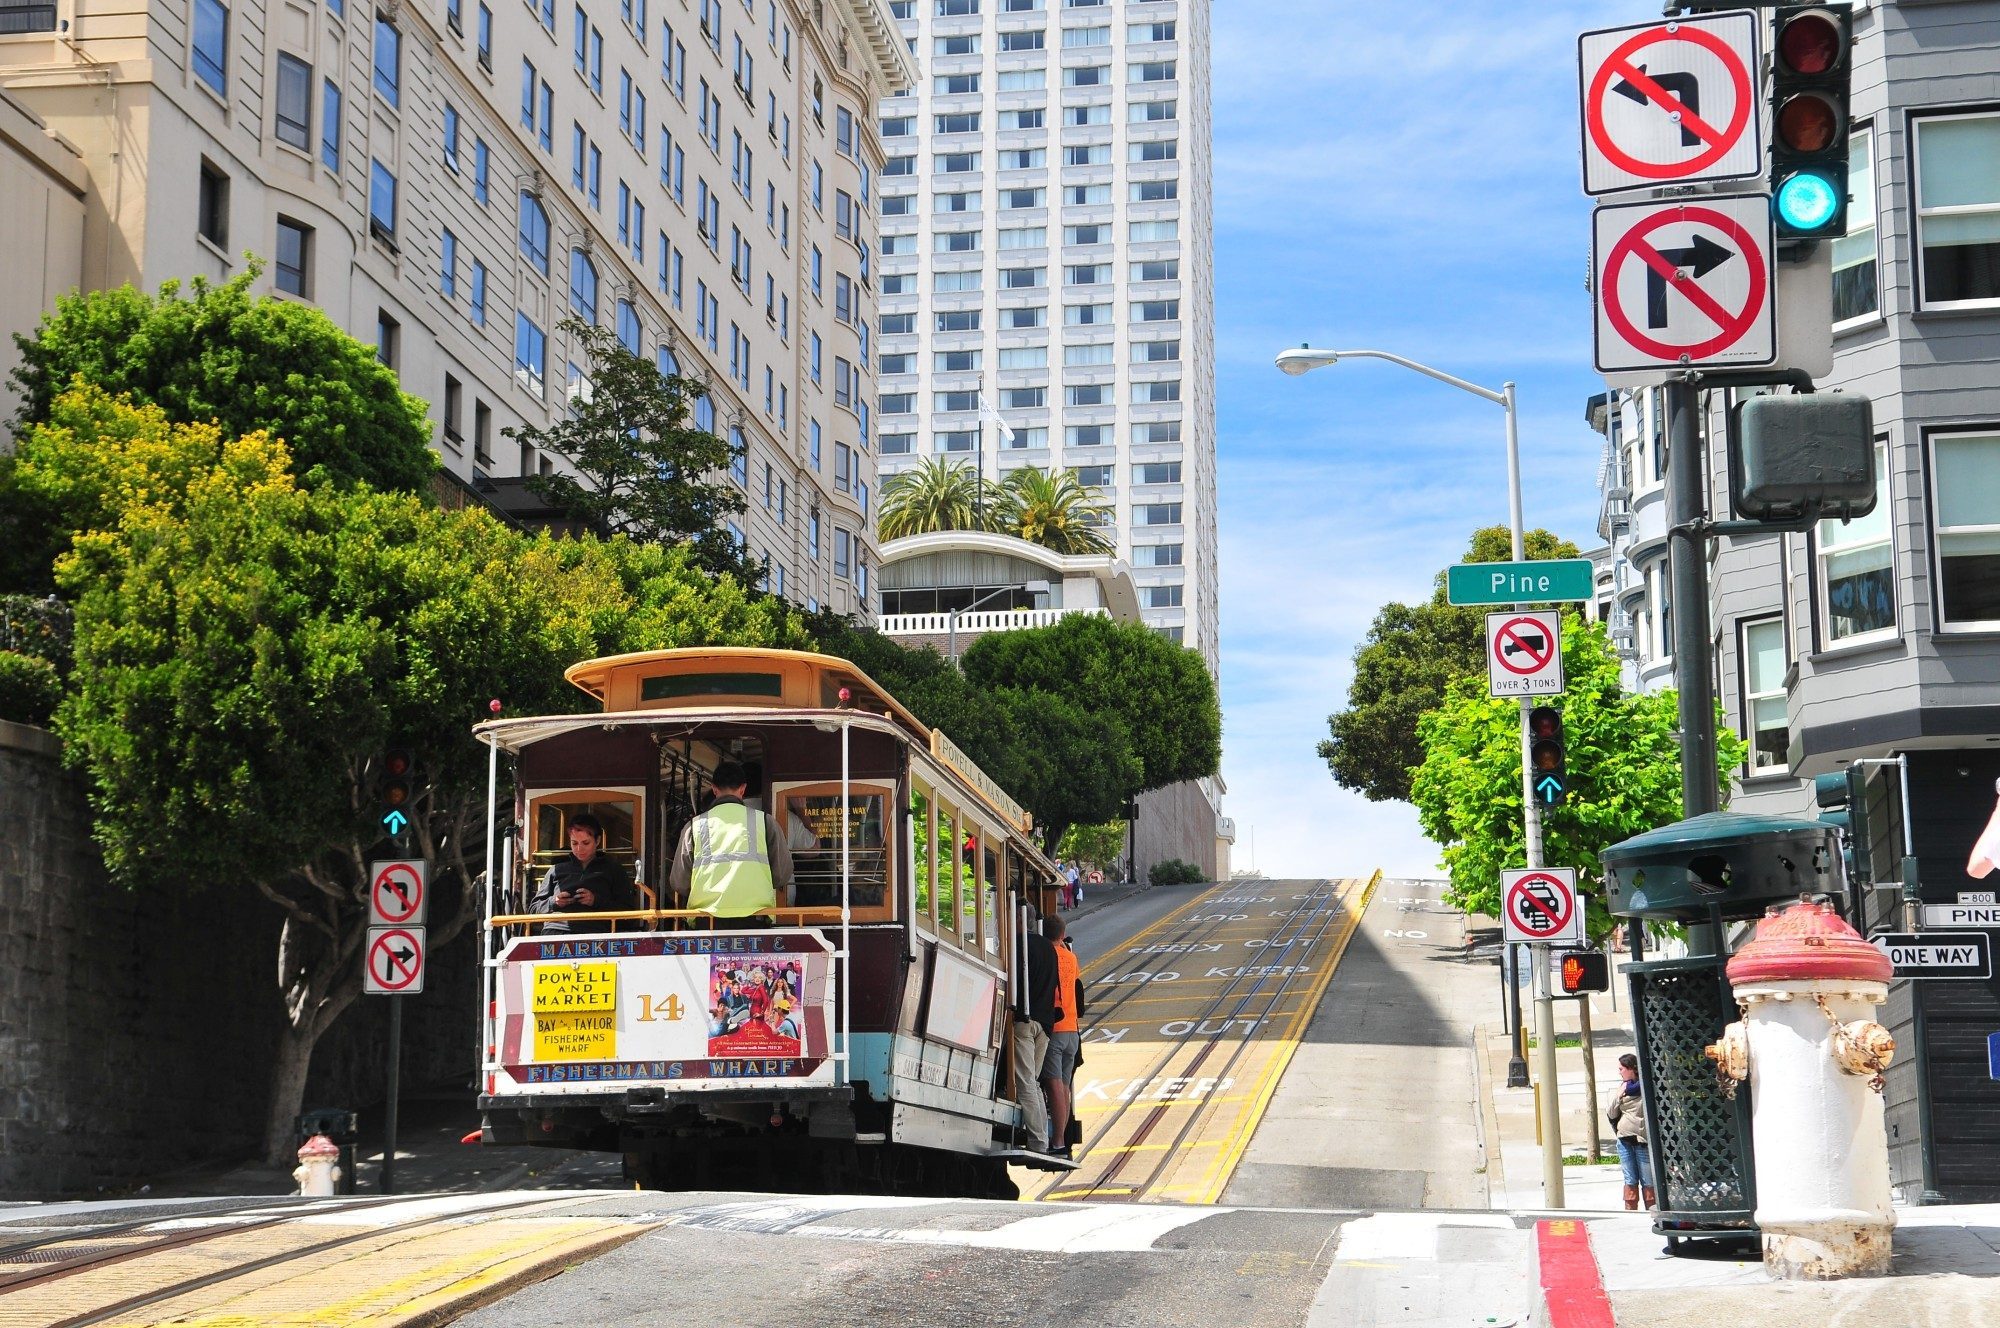 San Jose vs. San Francisco: Where Should You Live